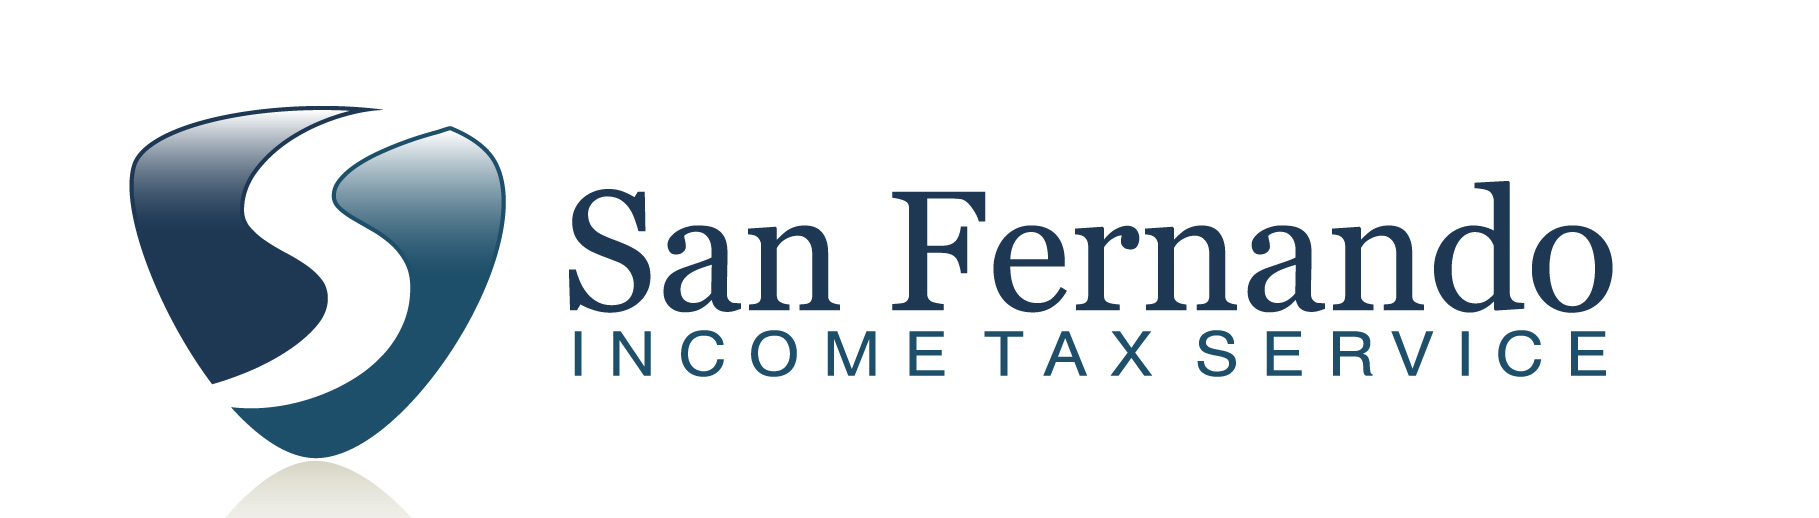 San Fernando Income Tax Services 15257 Parthenia St, North Hills California 91343